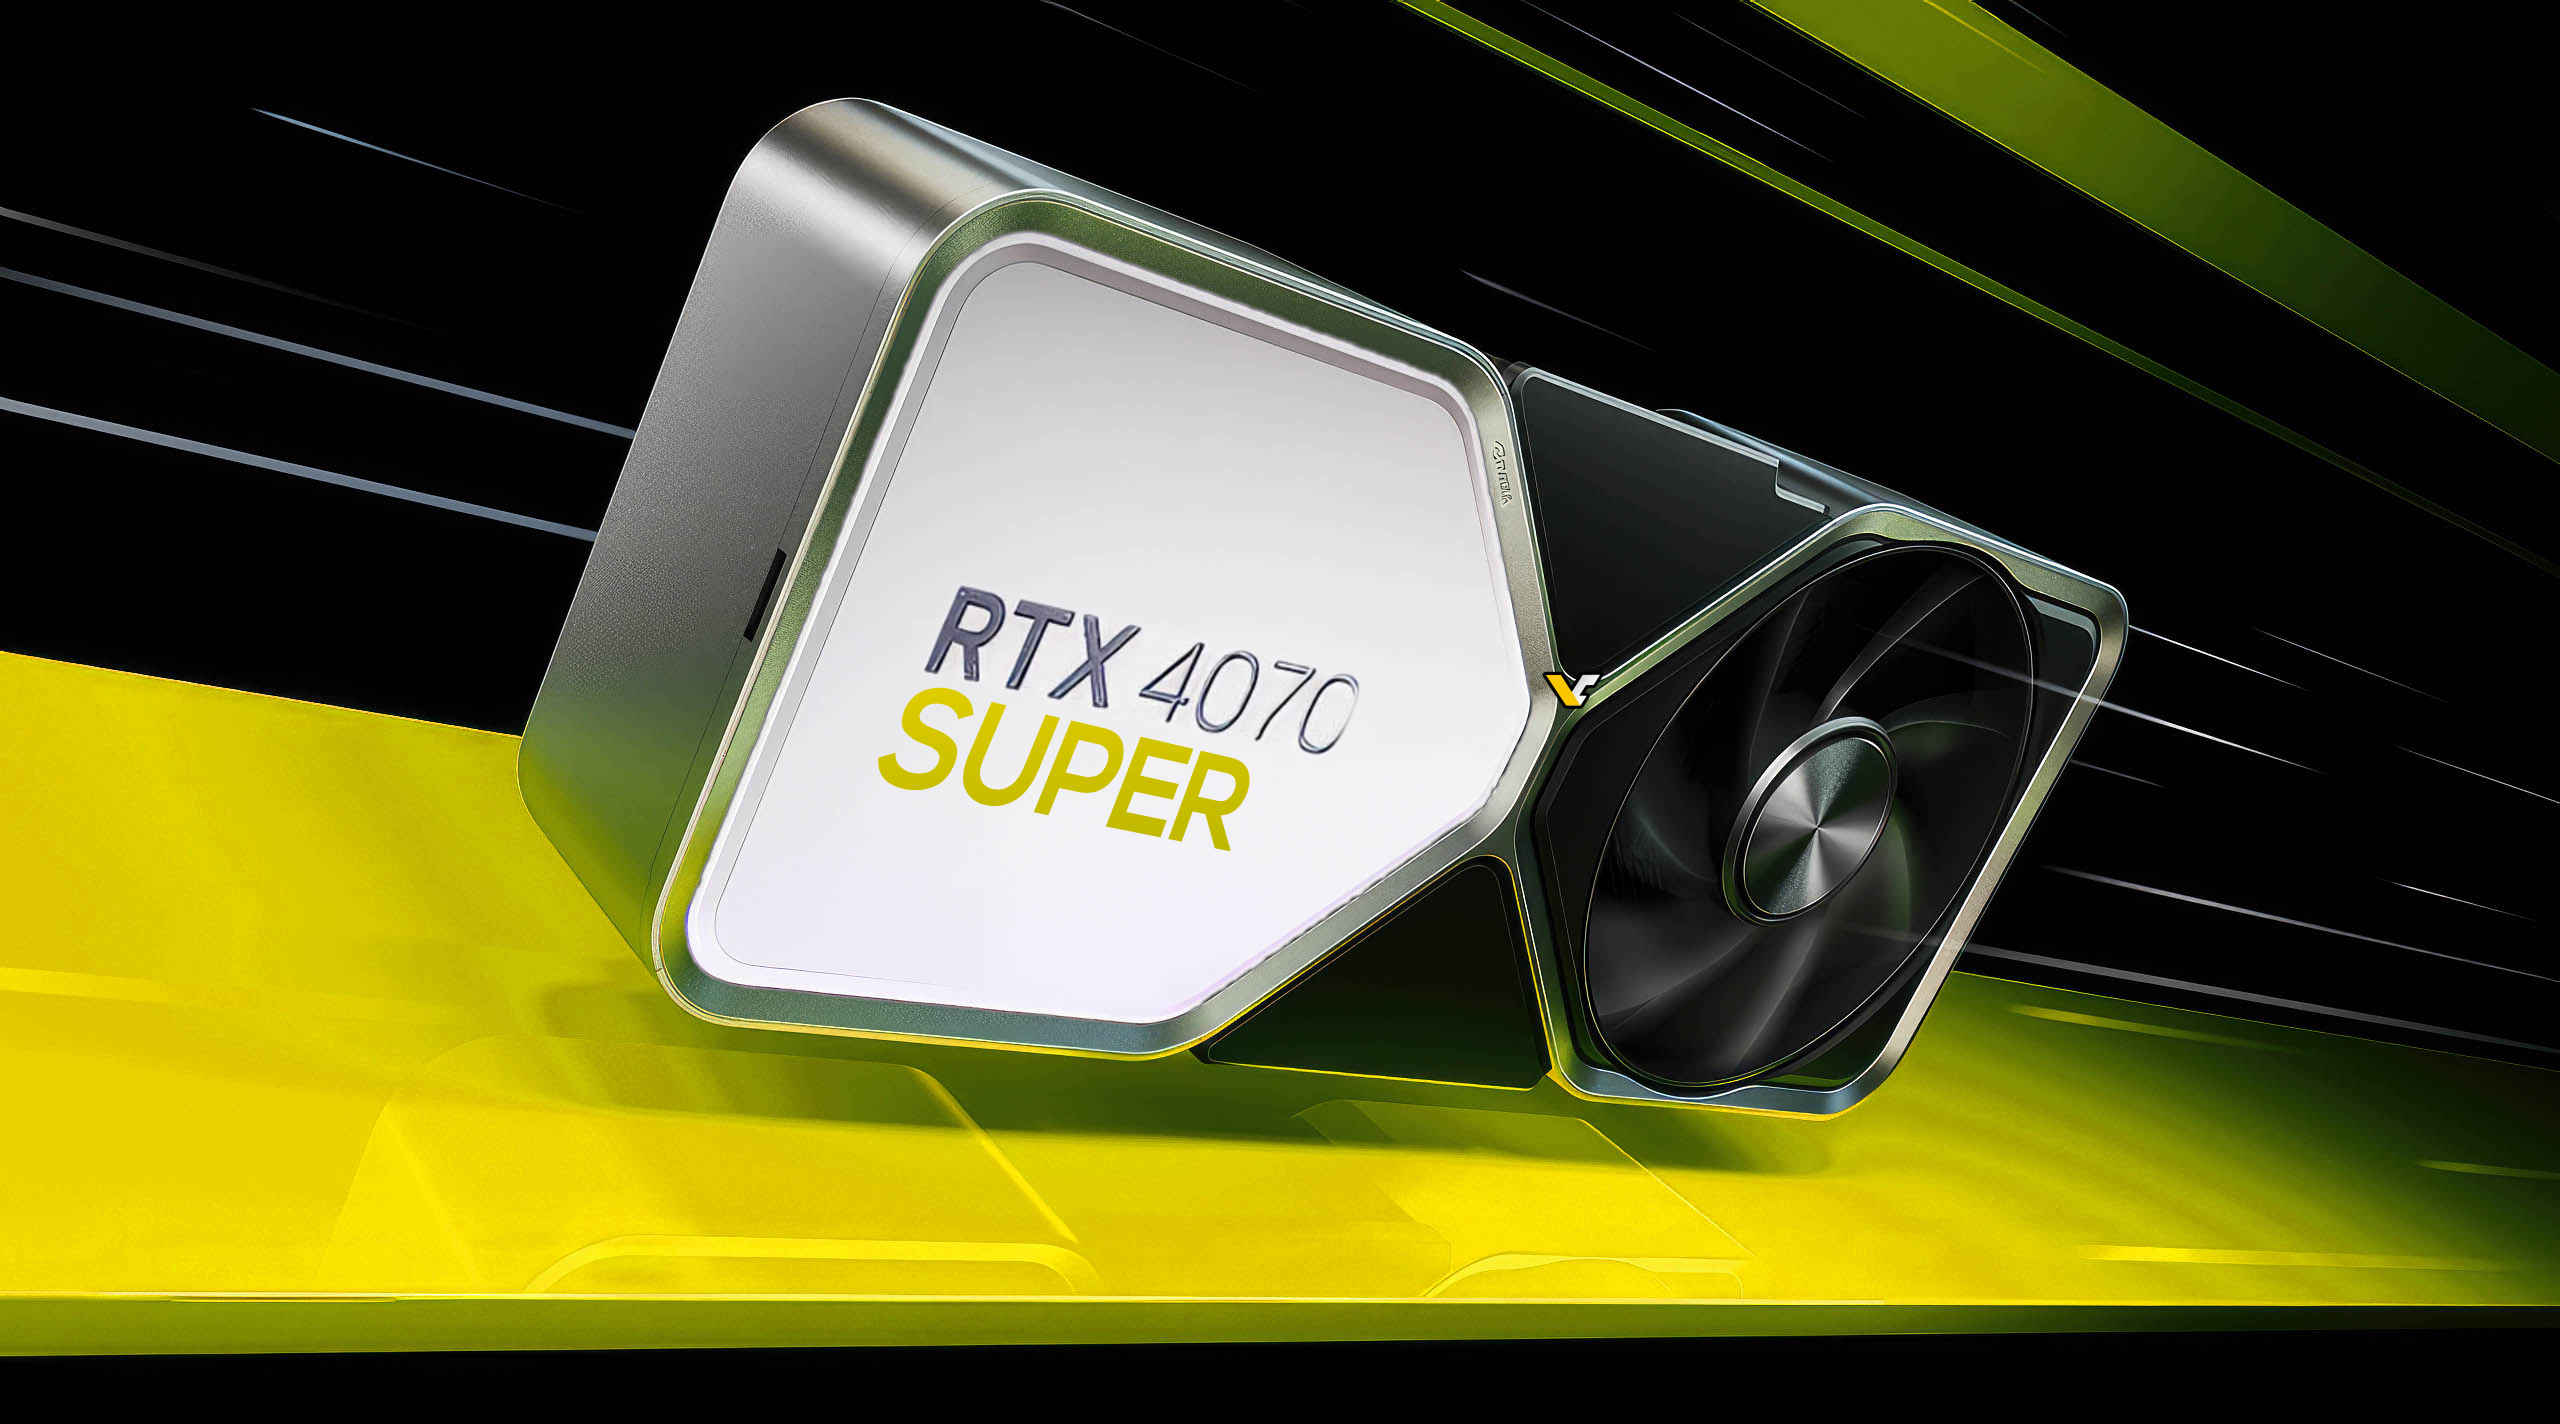 NVIDIA RTX 4080 Super, RTX 4070 Ti Super, RTX 4070 Super Specs, Price,  Performance Leaks And Rumors